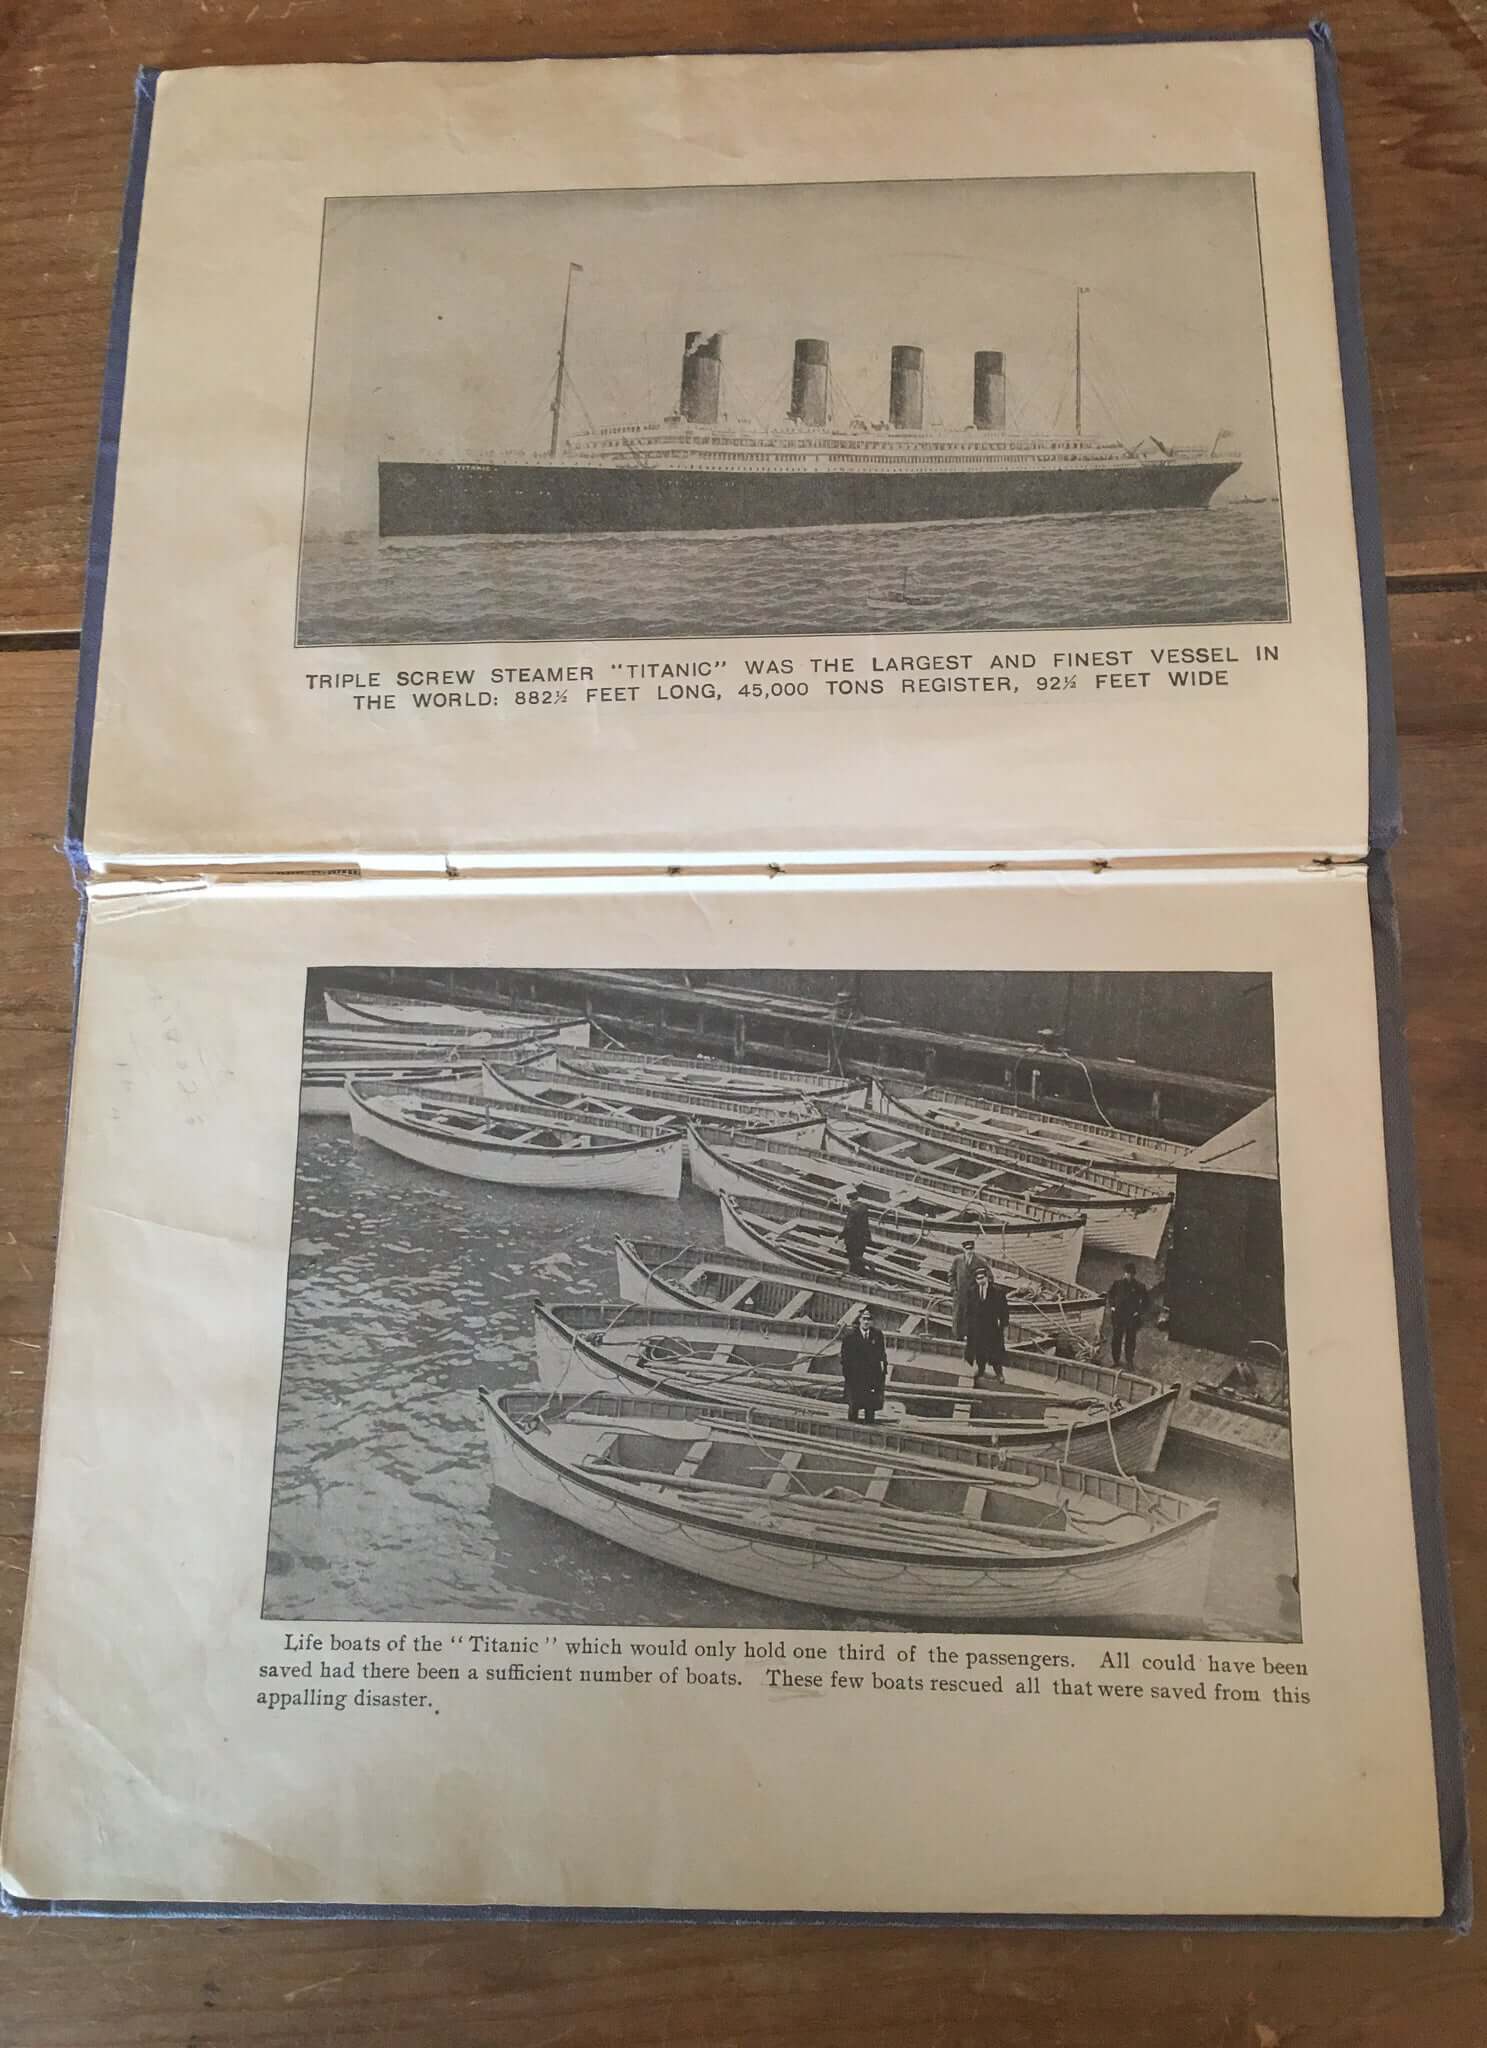 LeHay's Vintage Shop, 1912 Memorial Edition “Sinking of the Titanic”, Prospectus – Salesman Sample